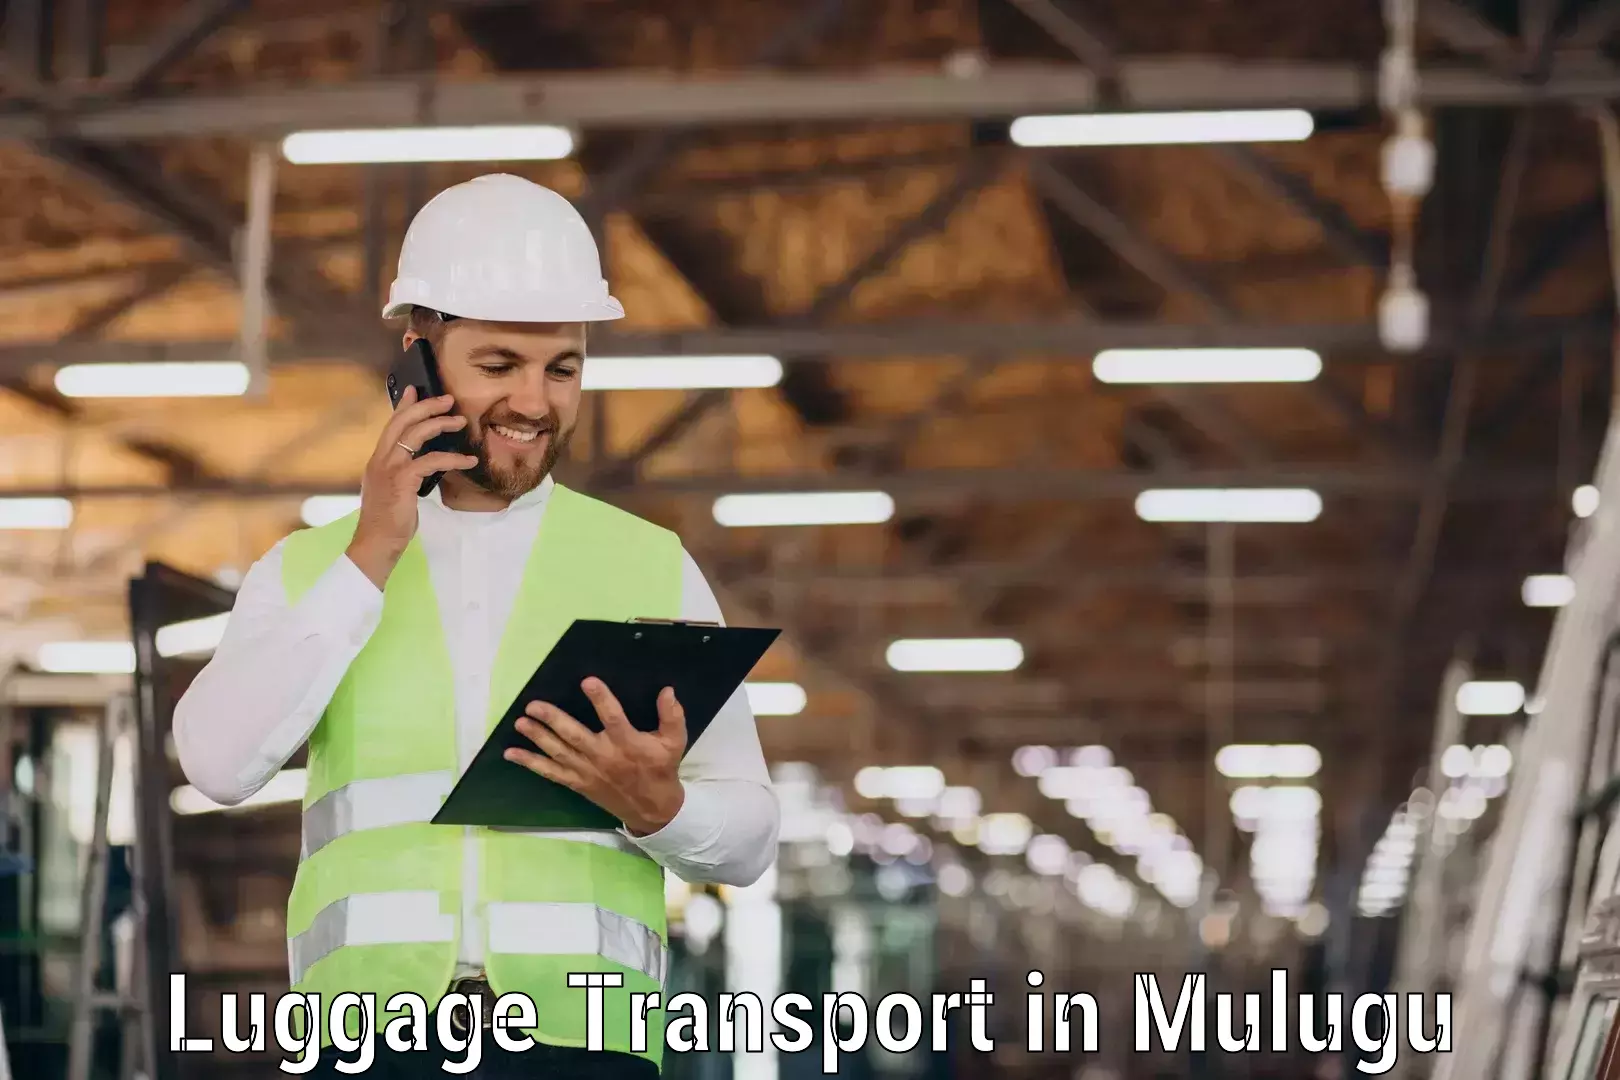 Luggage transfer service in Mulugu